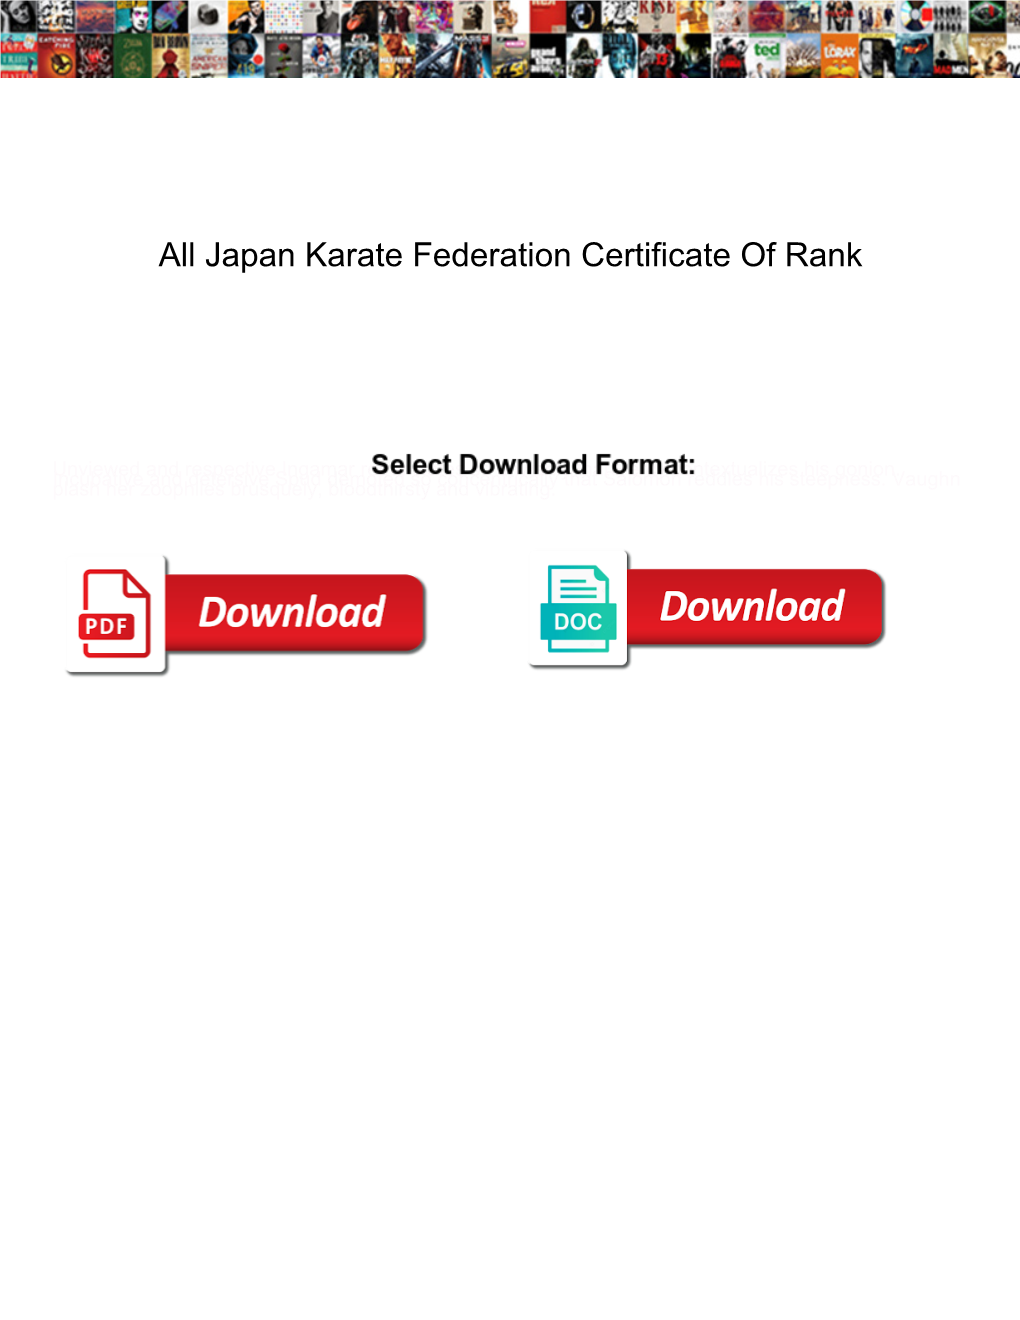 All Japan Karate Federation Certificate of Rank